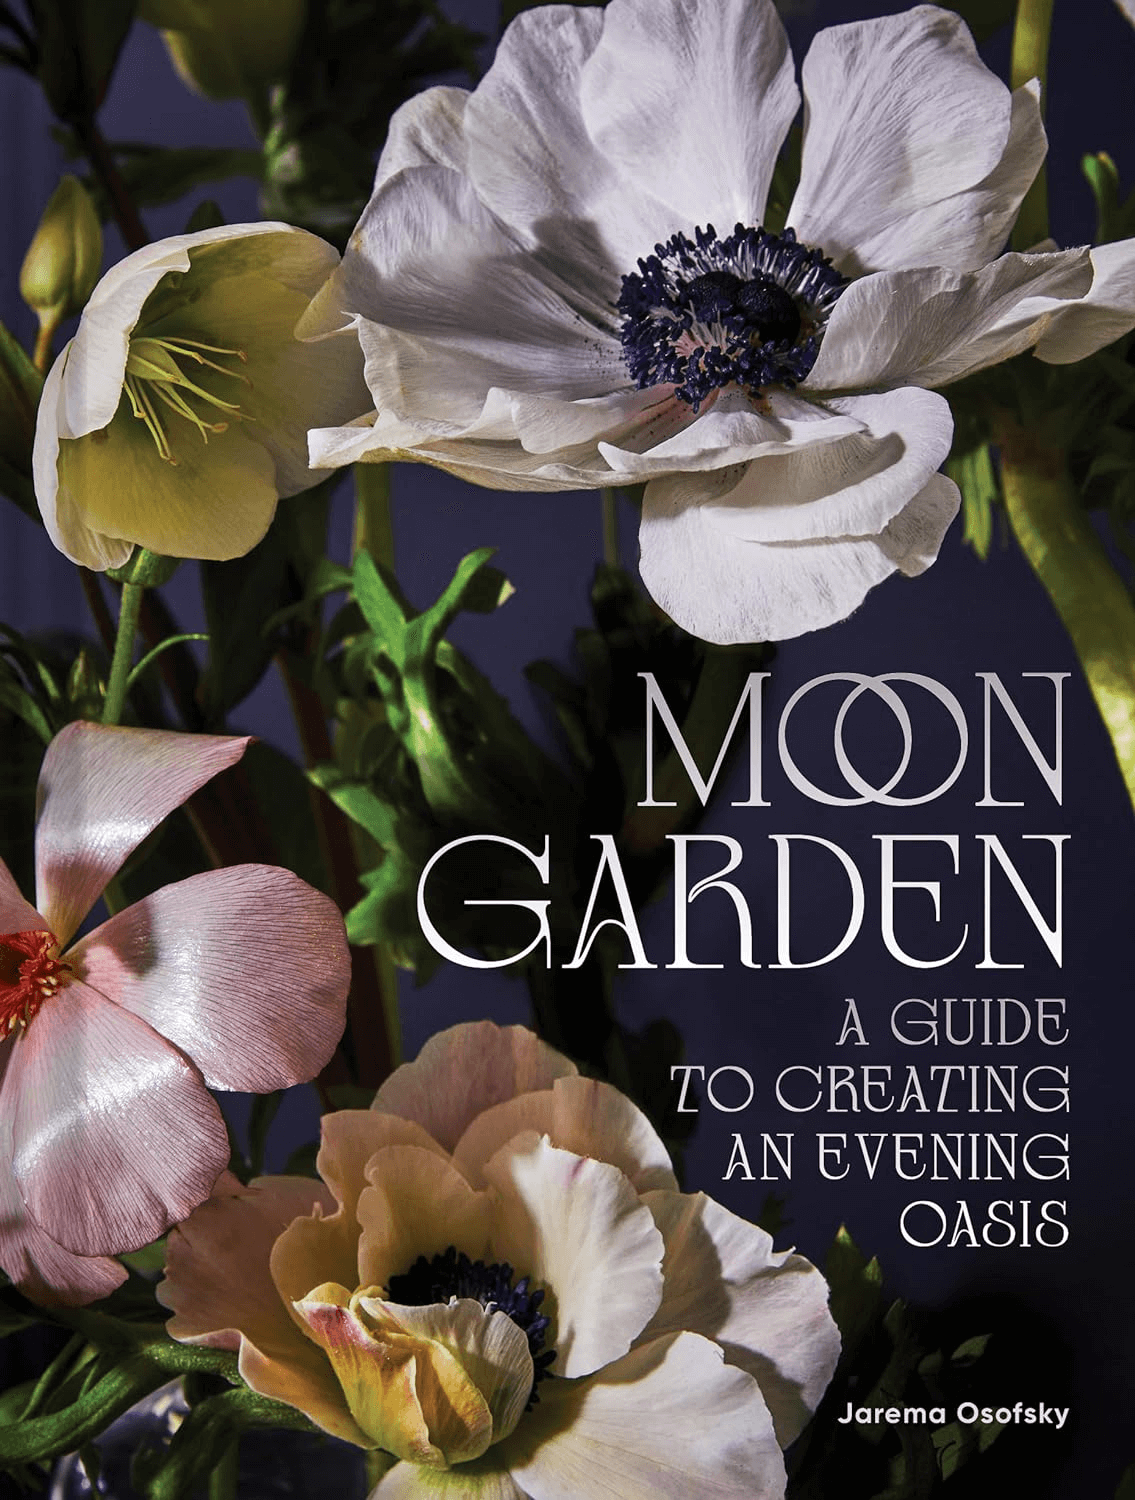 moon garden by jarema osofsky